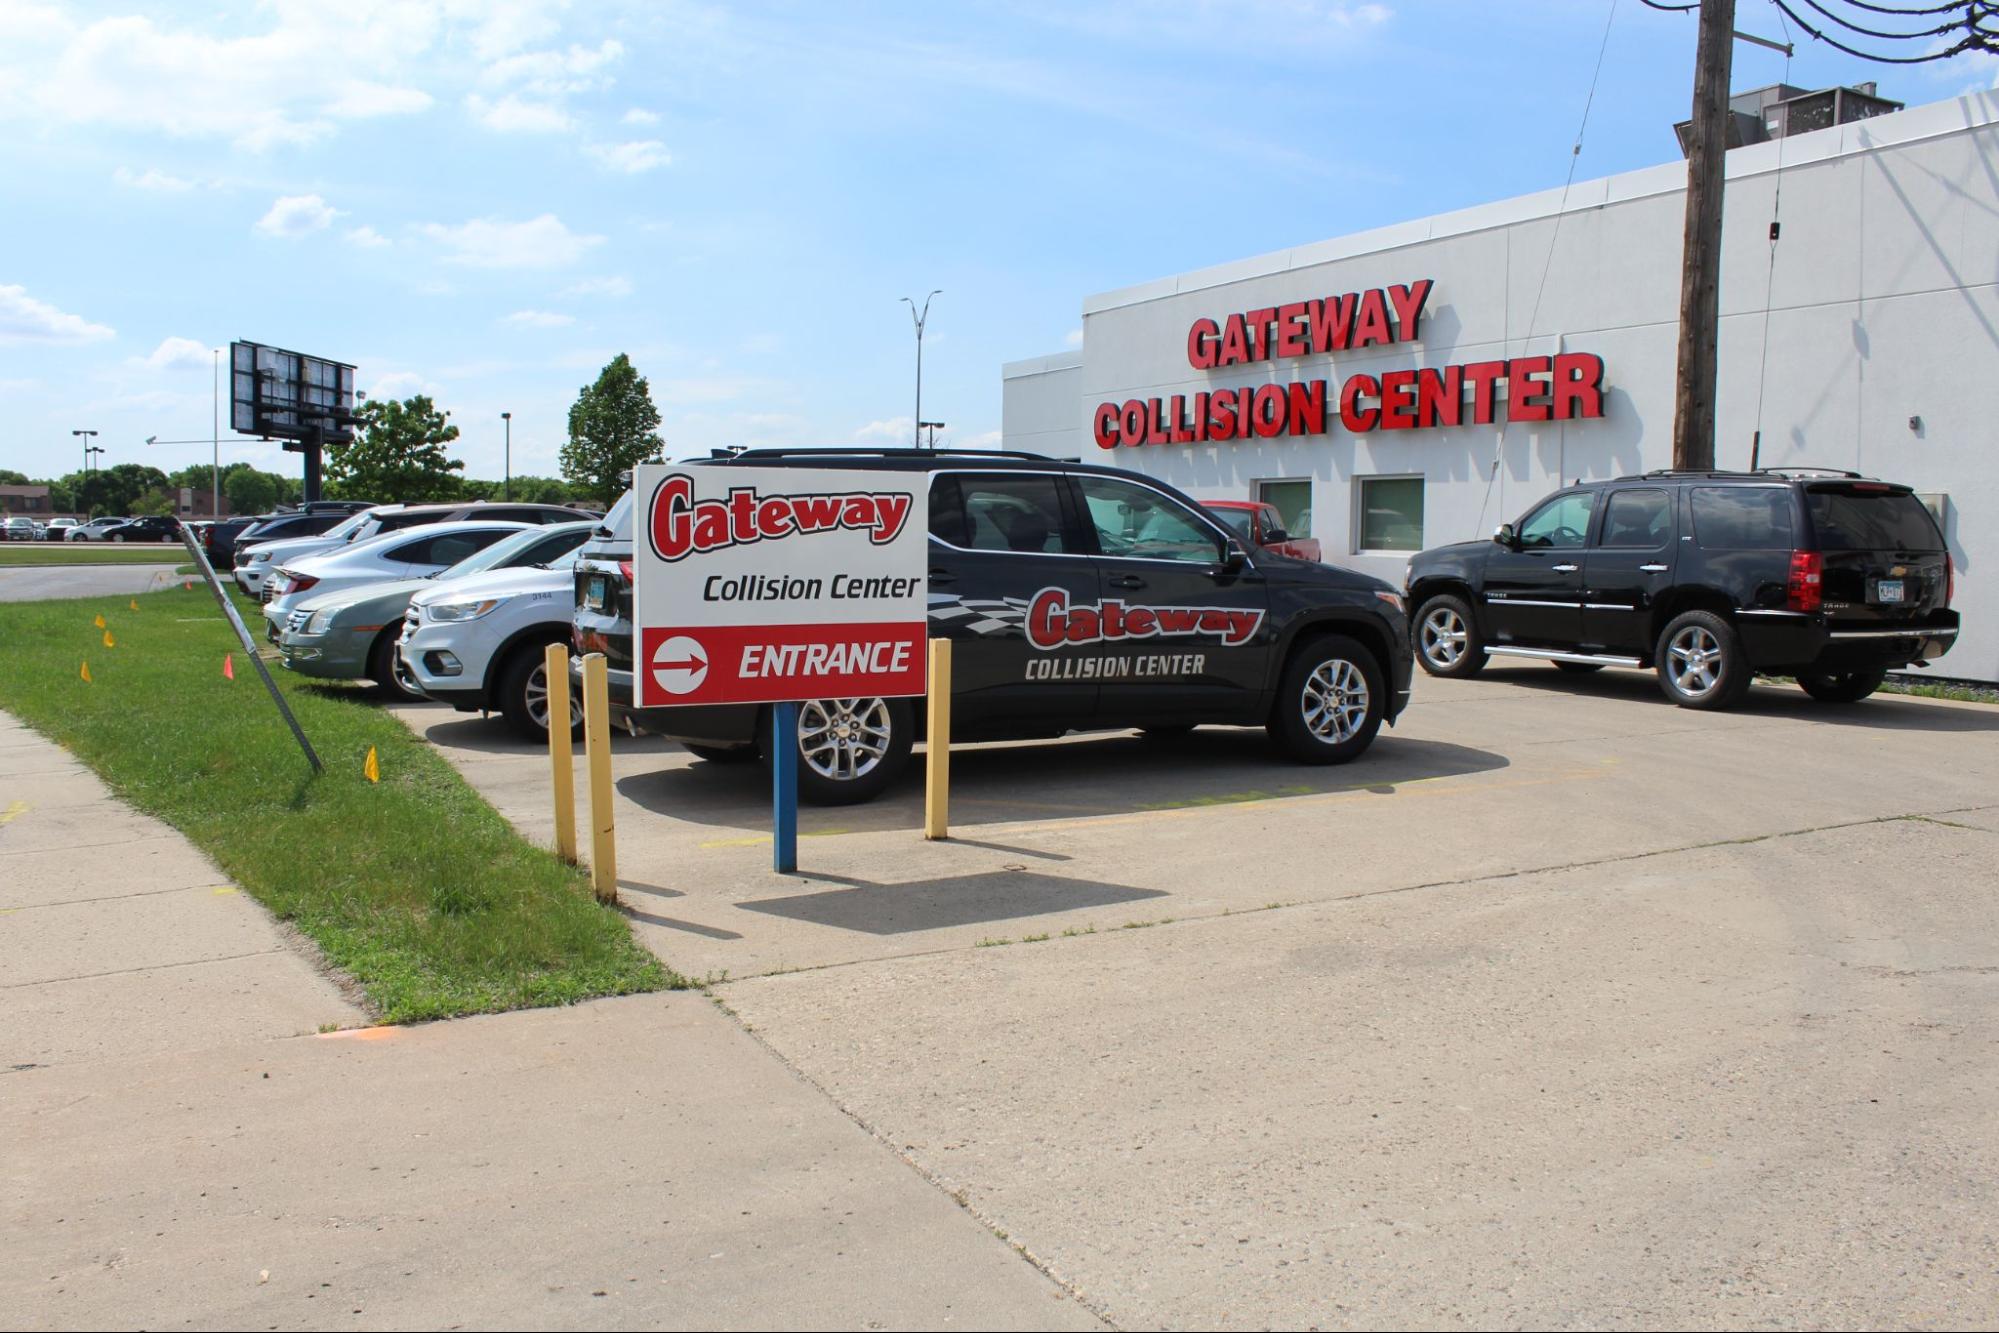 Gateway Chevrolet Clearance Center